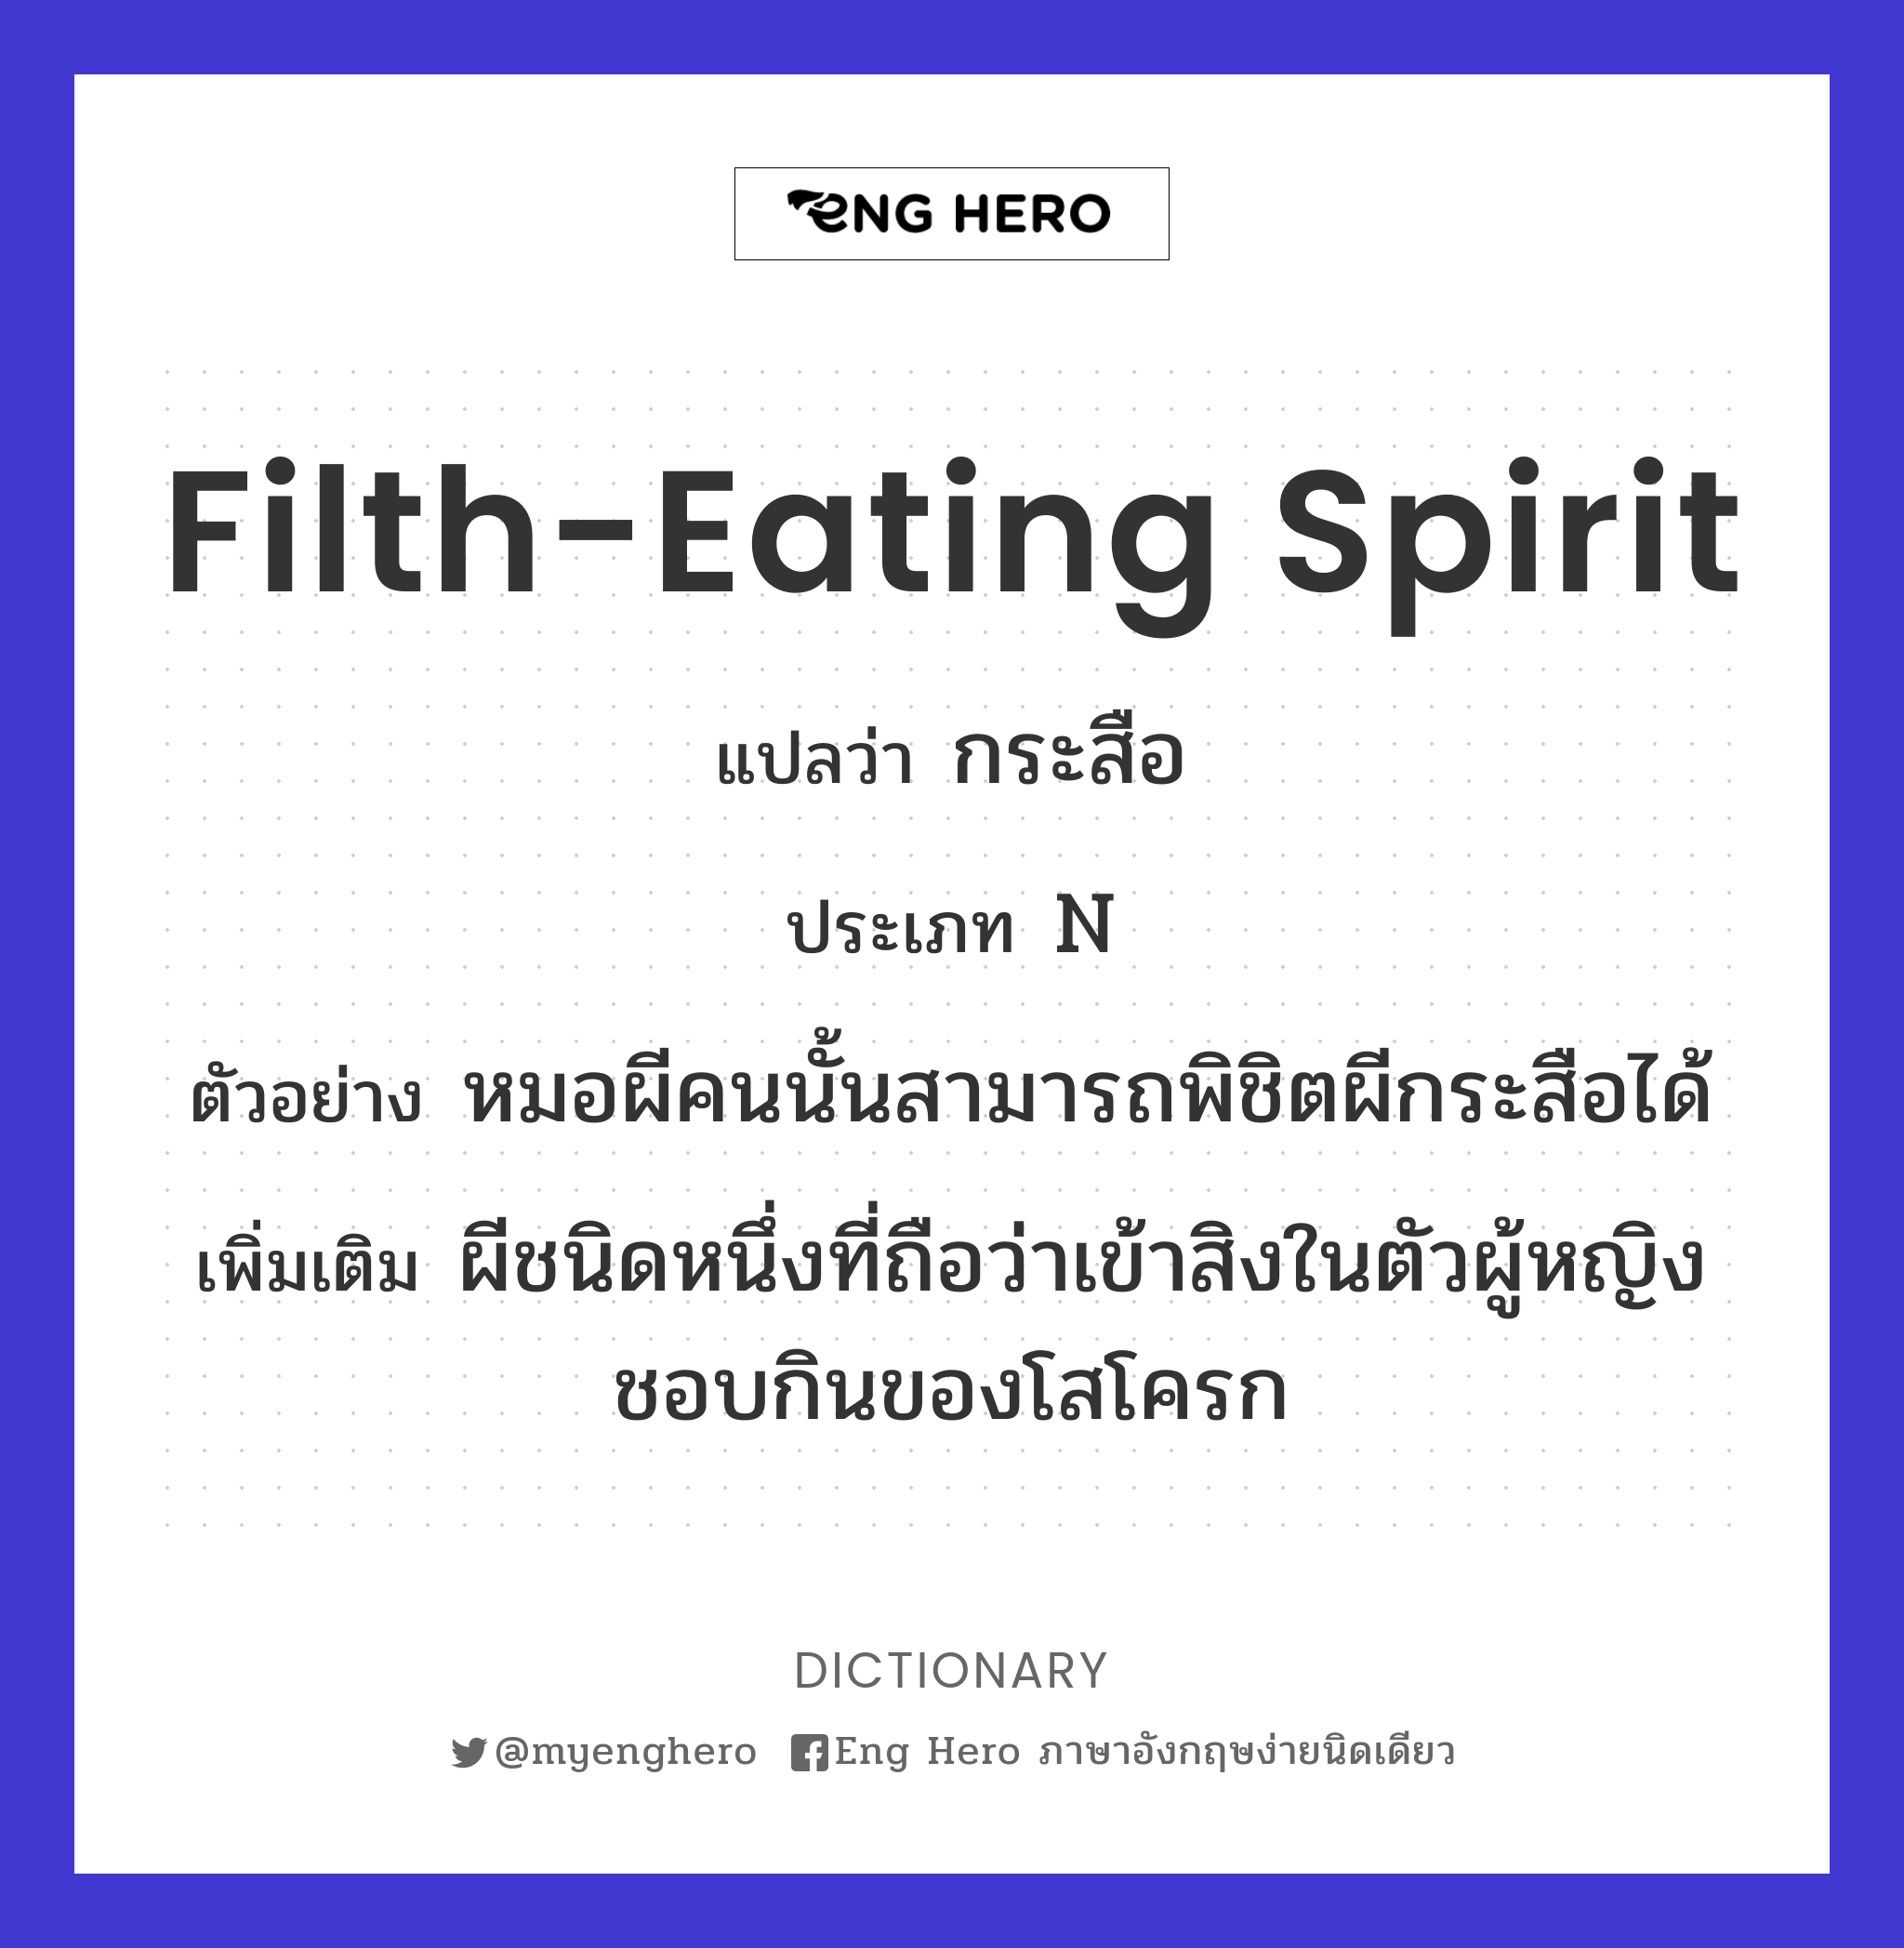 filth-eating spirit